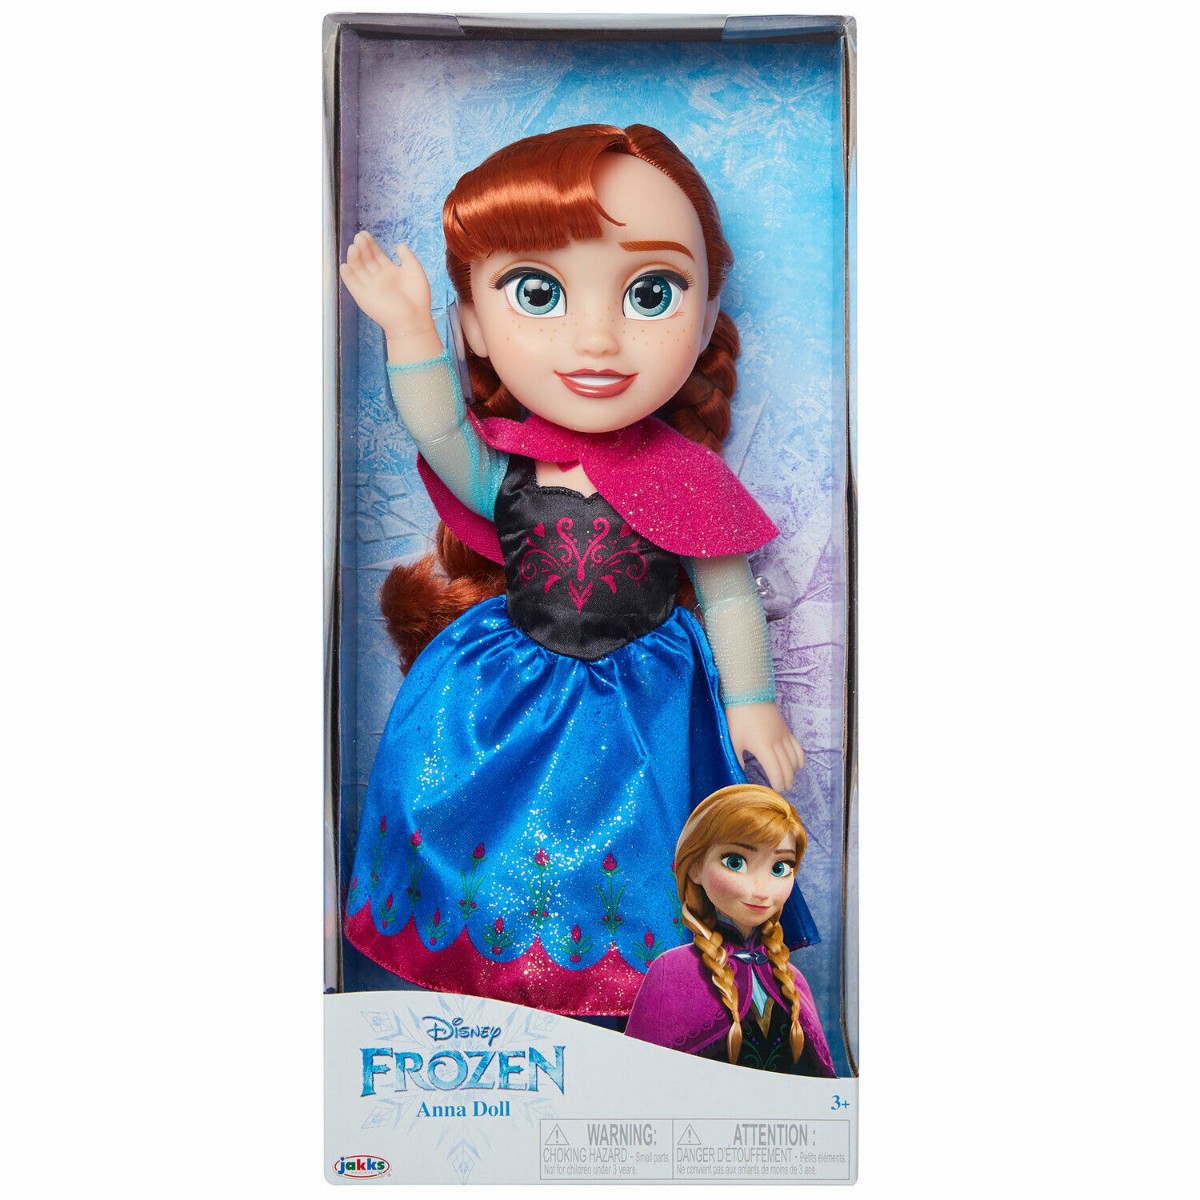 frozen toddler doll